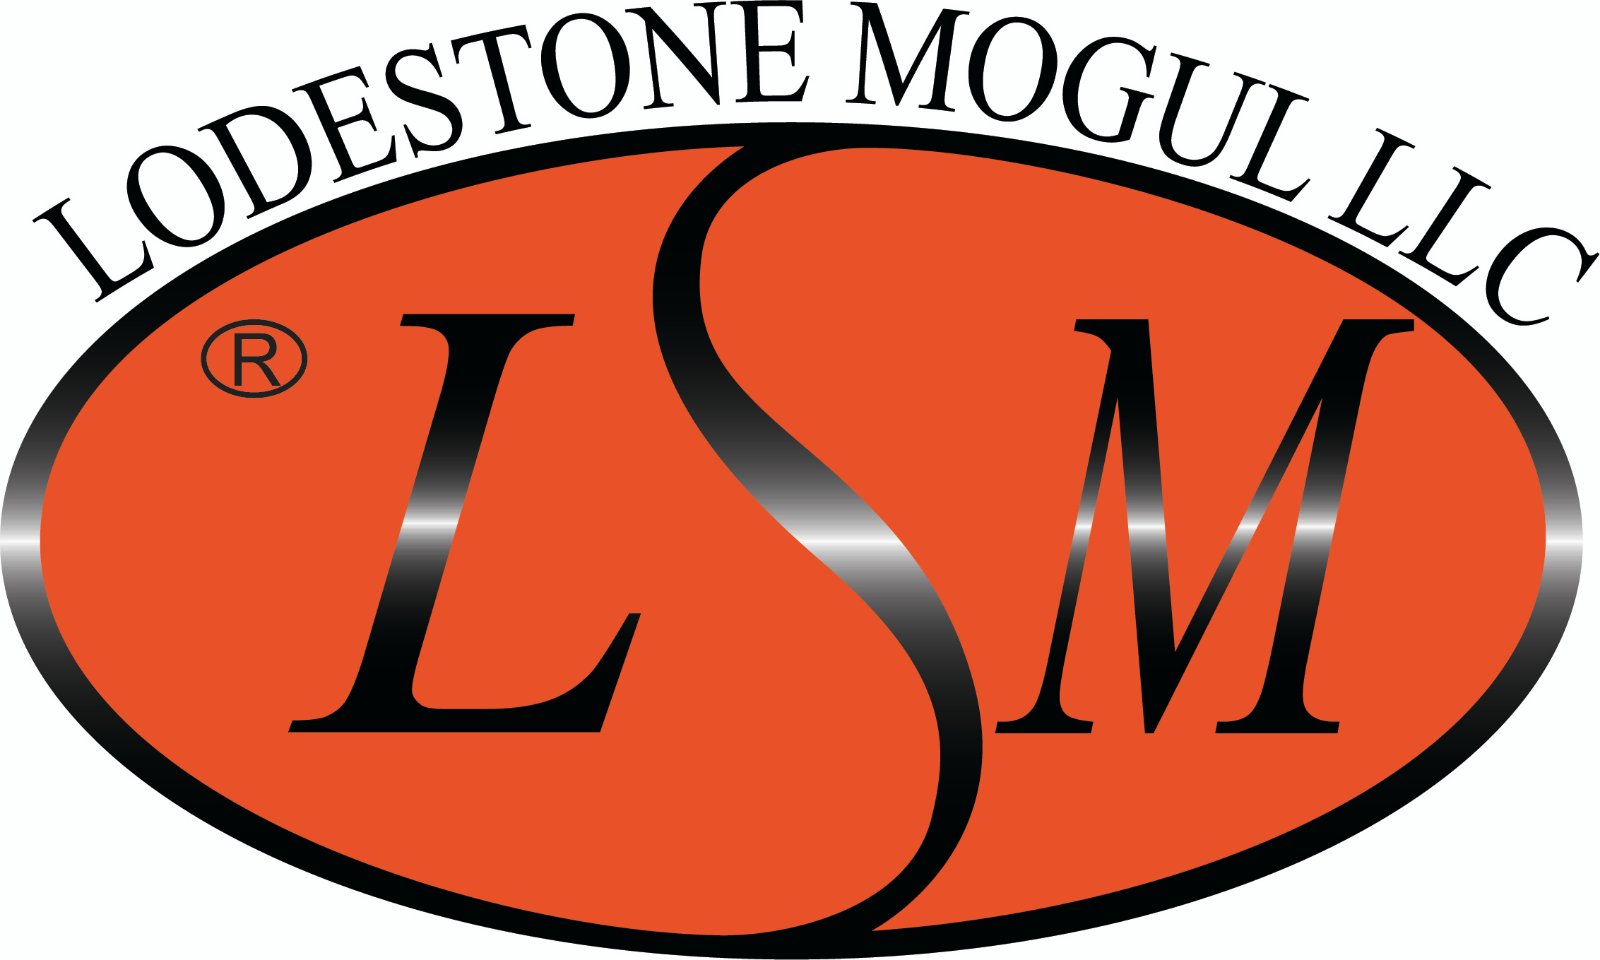 New Site: Lodestone Mogul